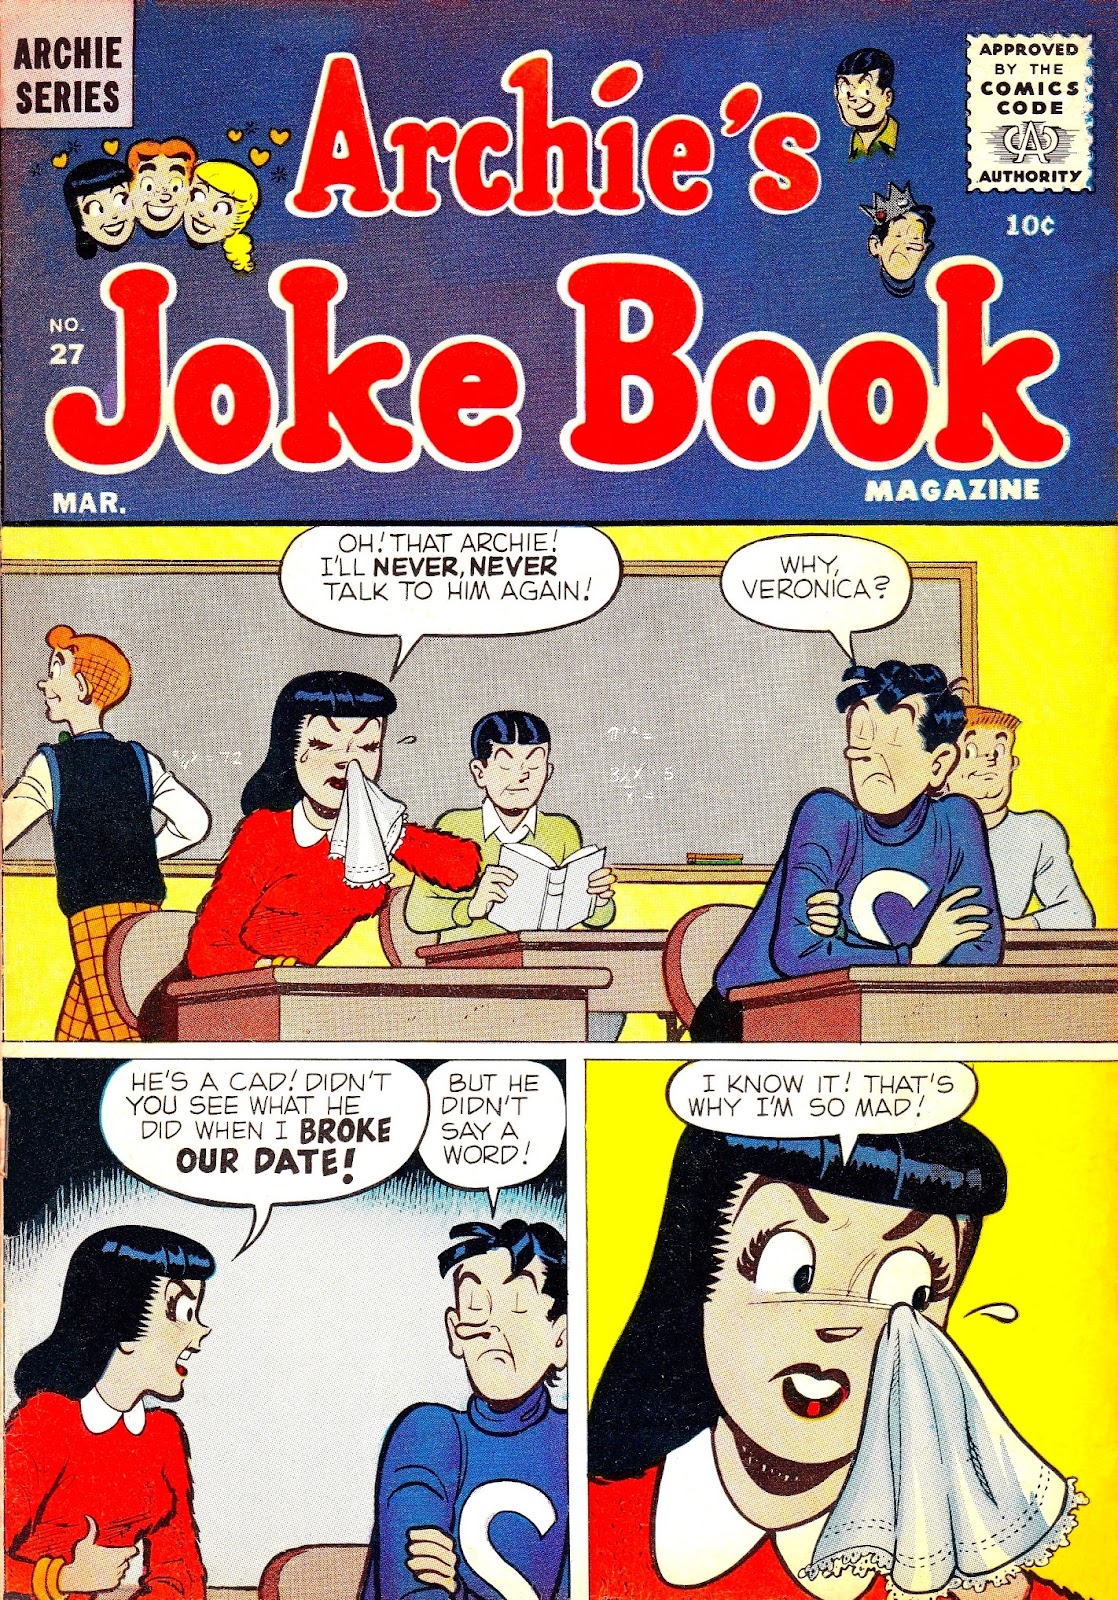 Archie's Joke Book Magazine issue 27 - Page 1